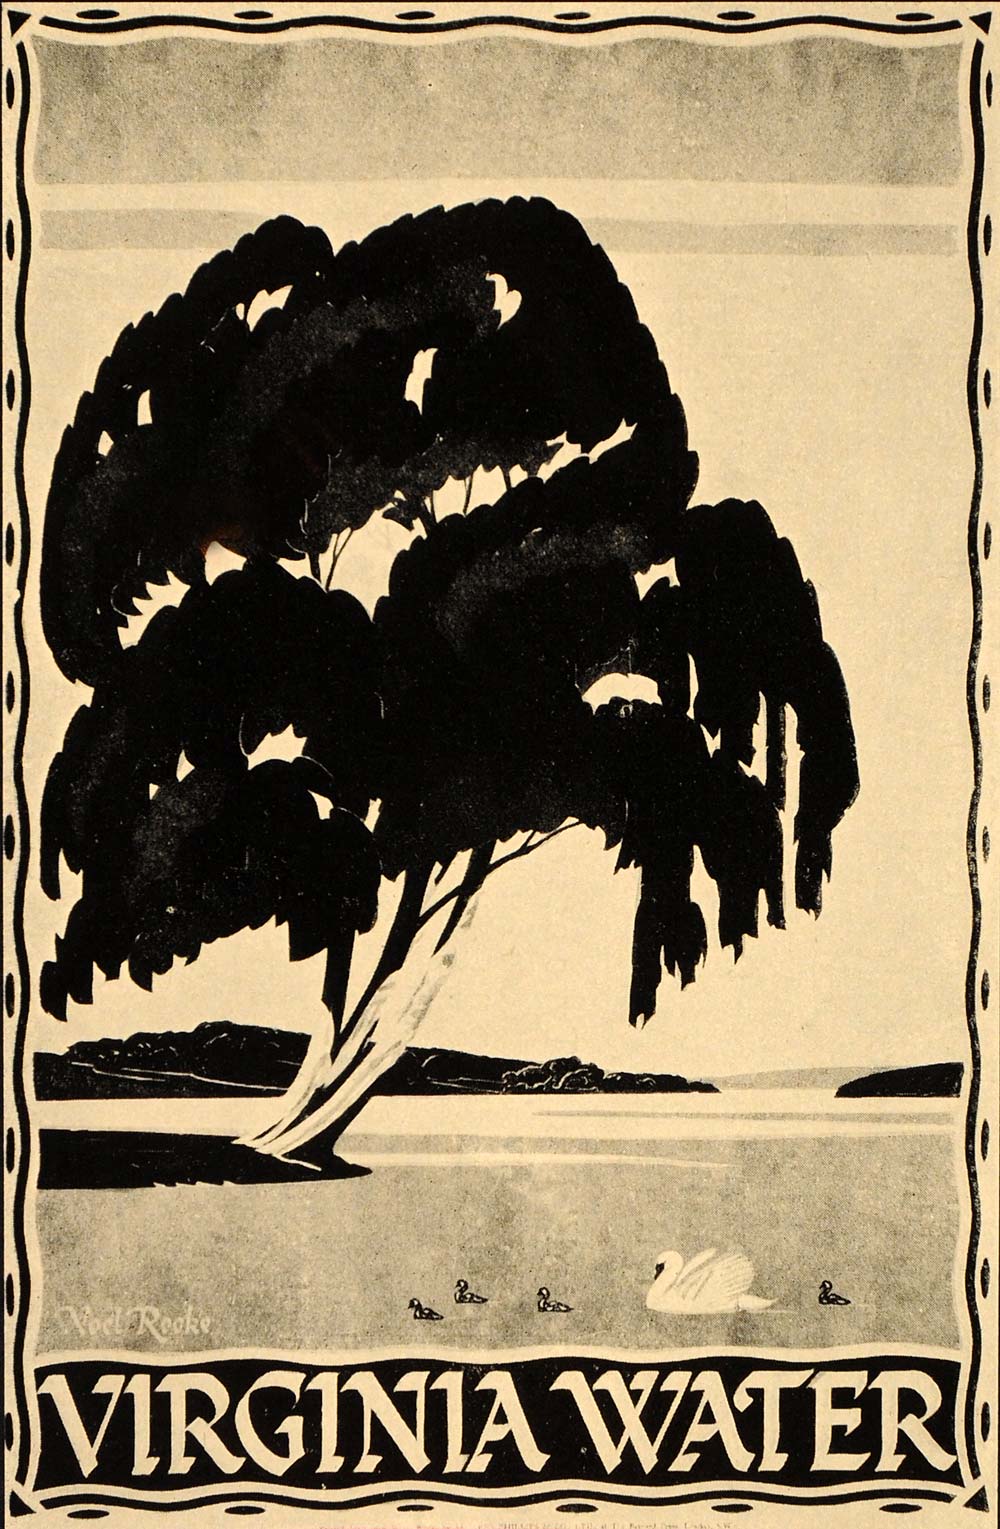 1933 Noel Rooke Virginia Water Underground Poster Print Landscape Swan POSA6